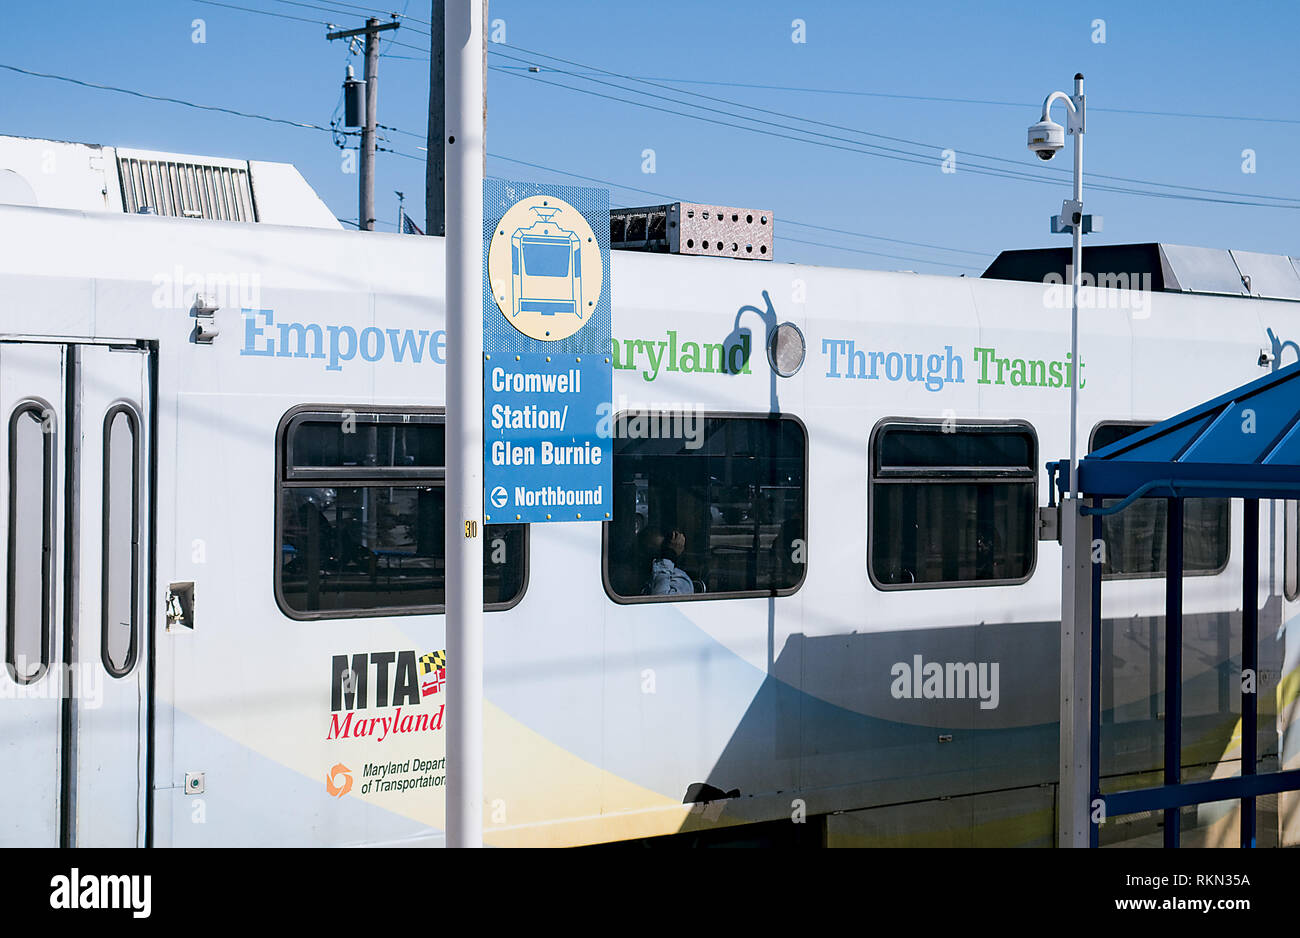 'Empower Maryland Through Transit' Slogan Baltimore Light RailLink Detail Stock Photo